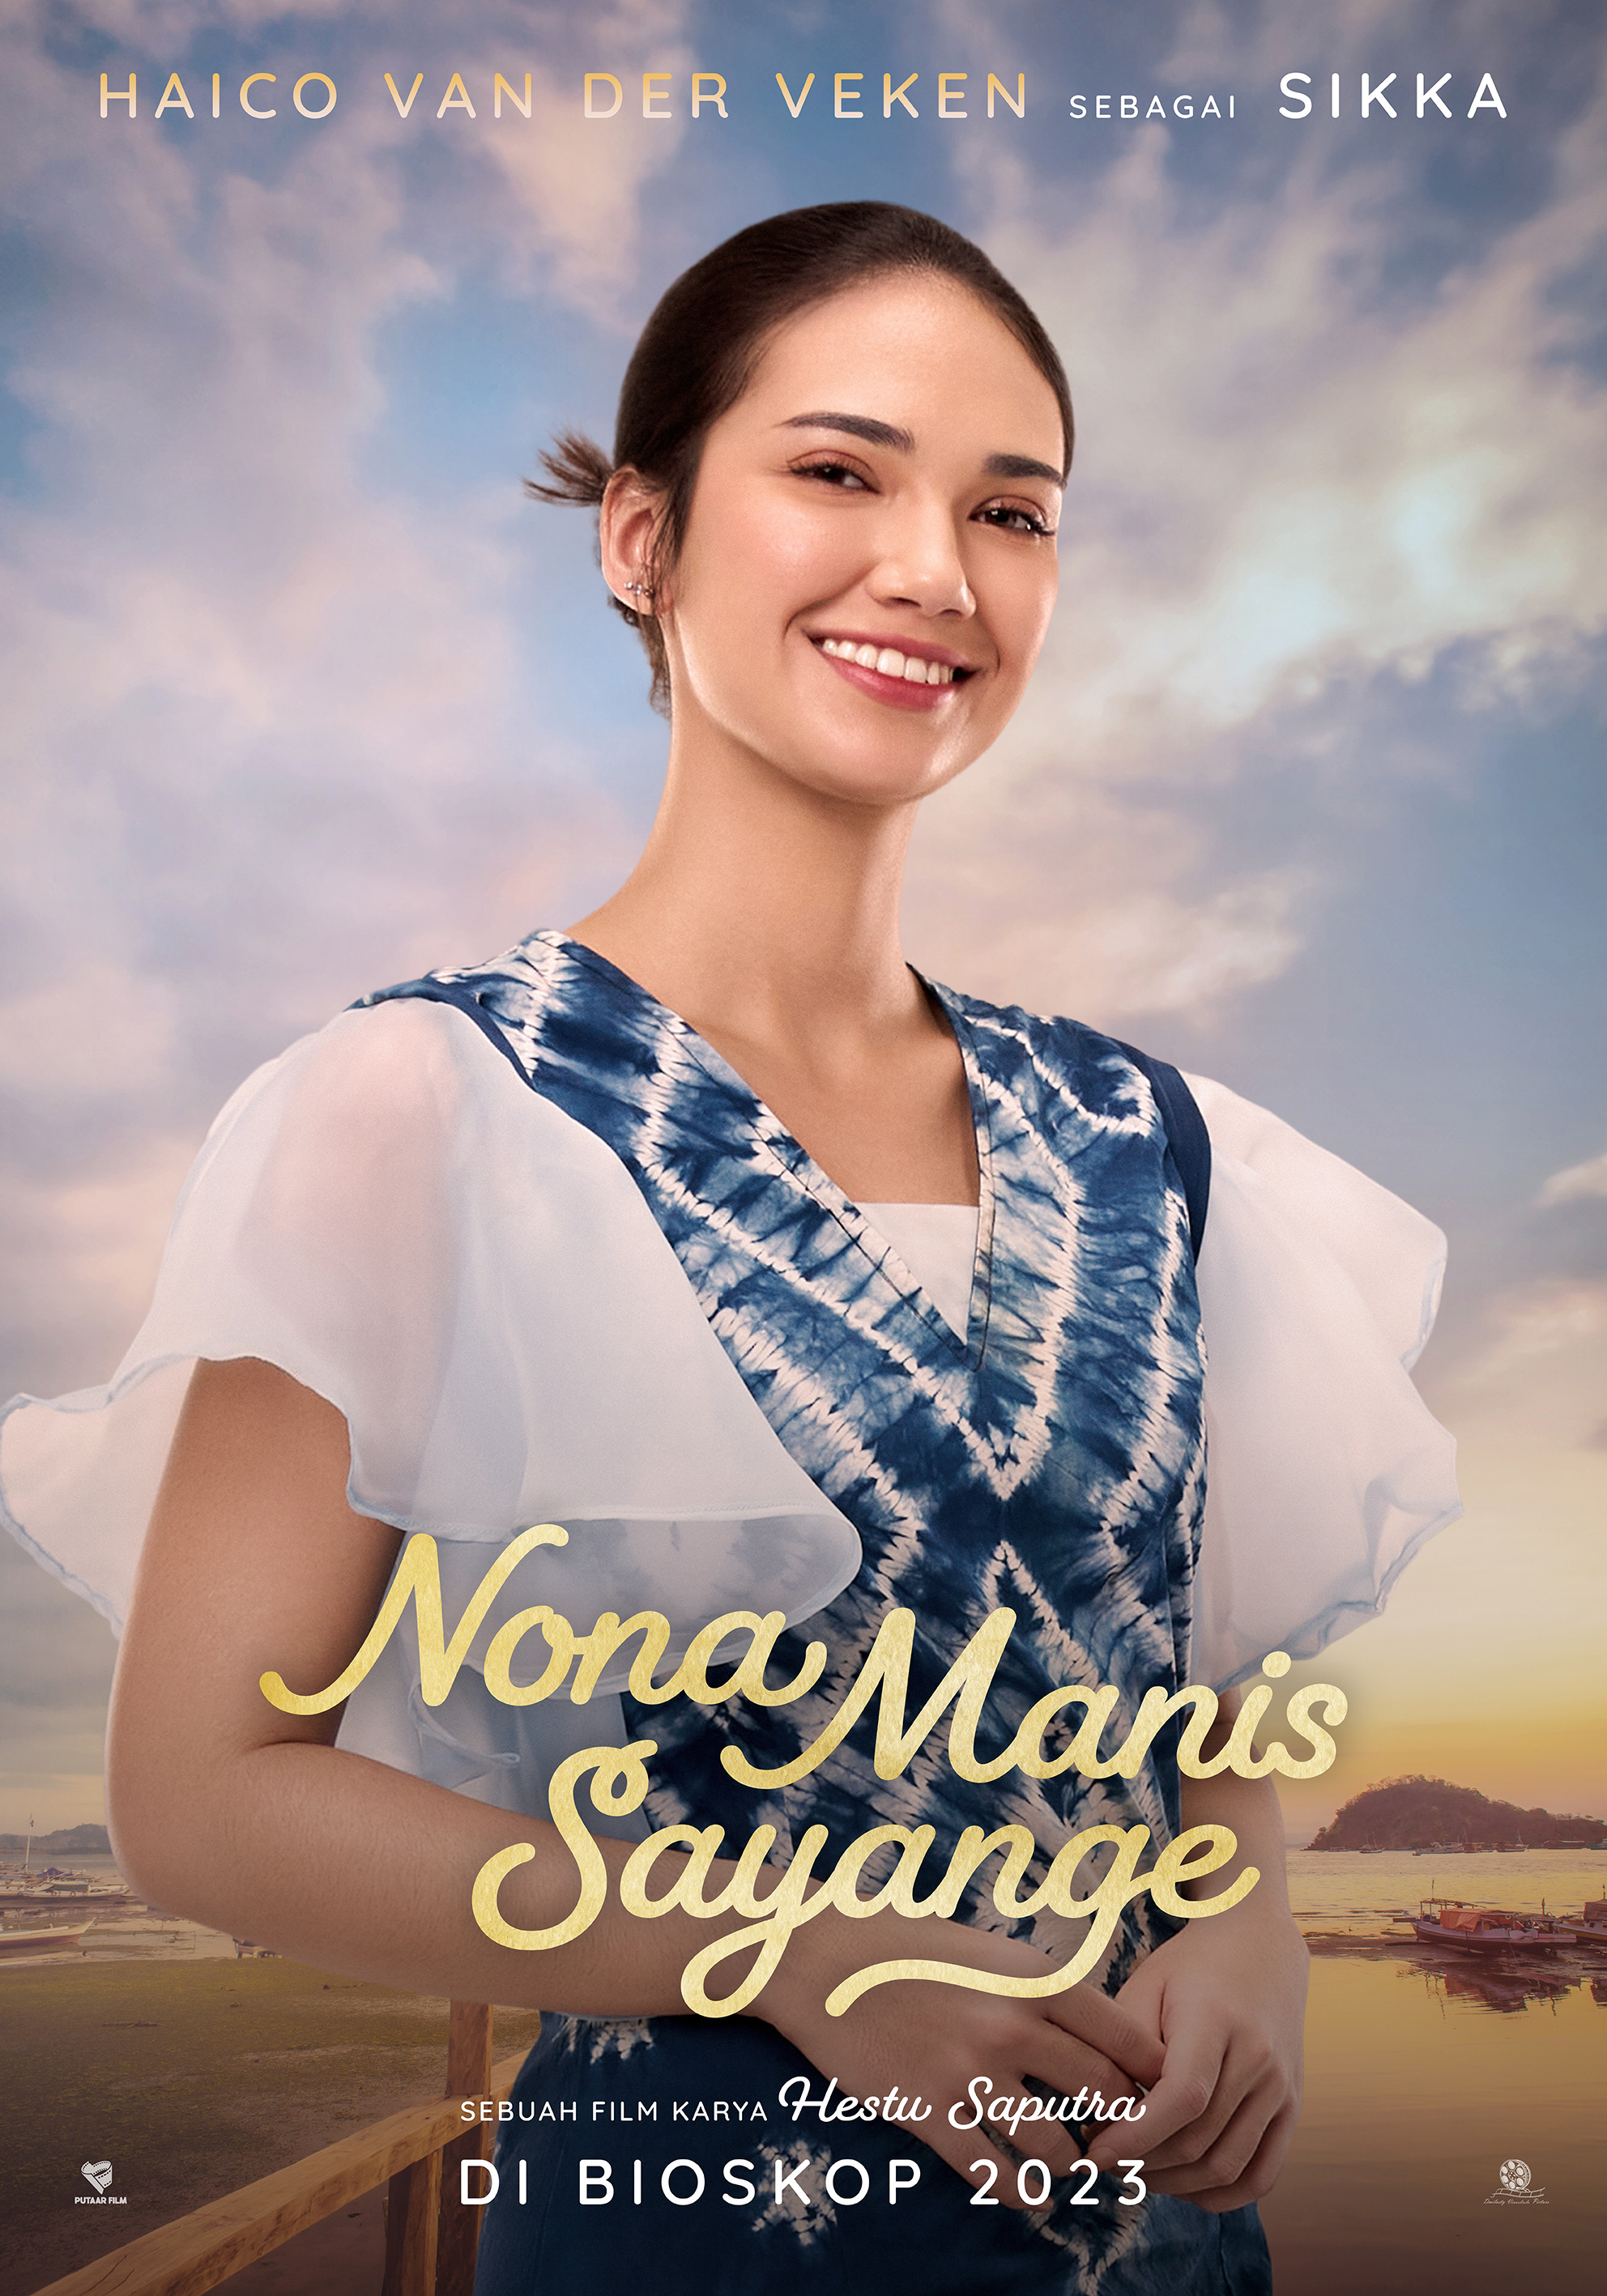 Mega Sized Movie Poster Image for Nona Manis Sayange (#4 of 6)